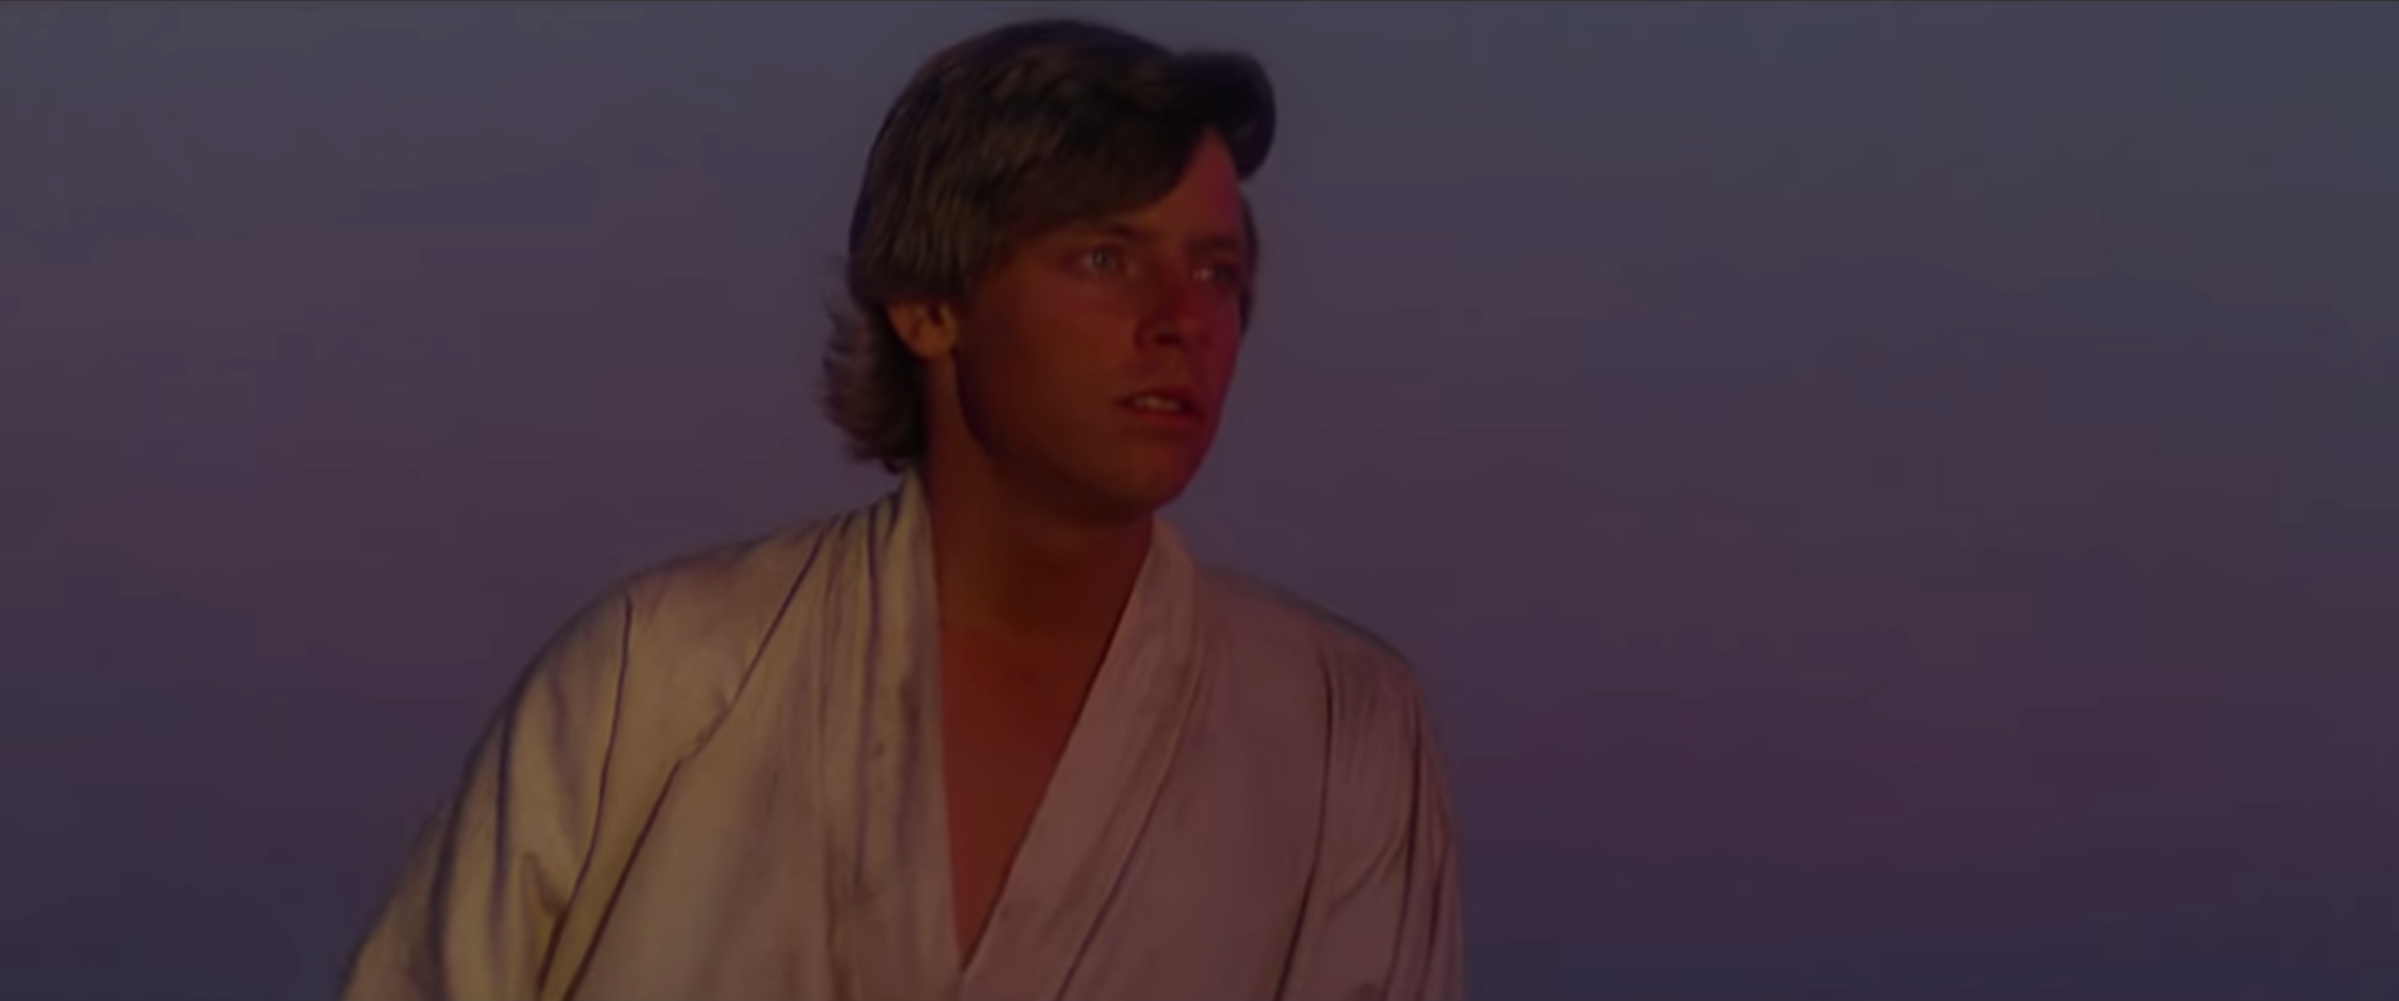 Star Wars: Rise of the Skywalker footage